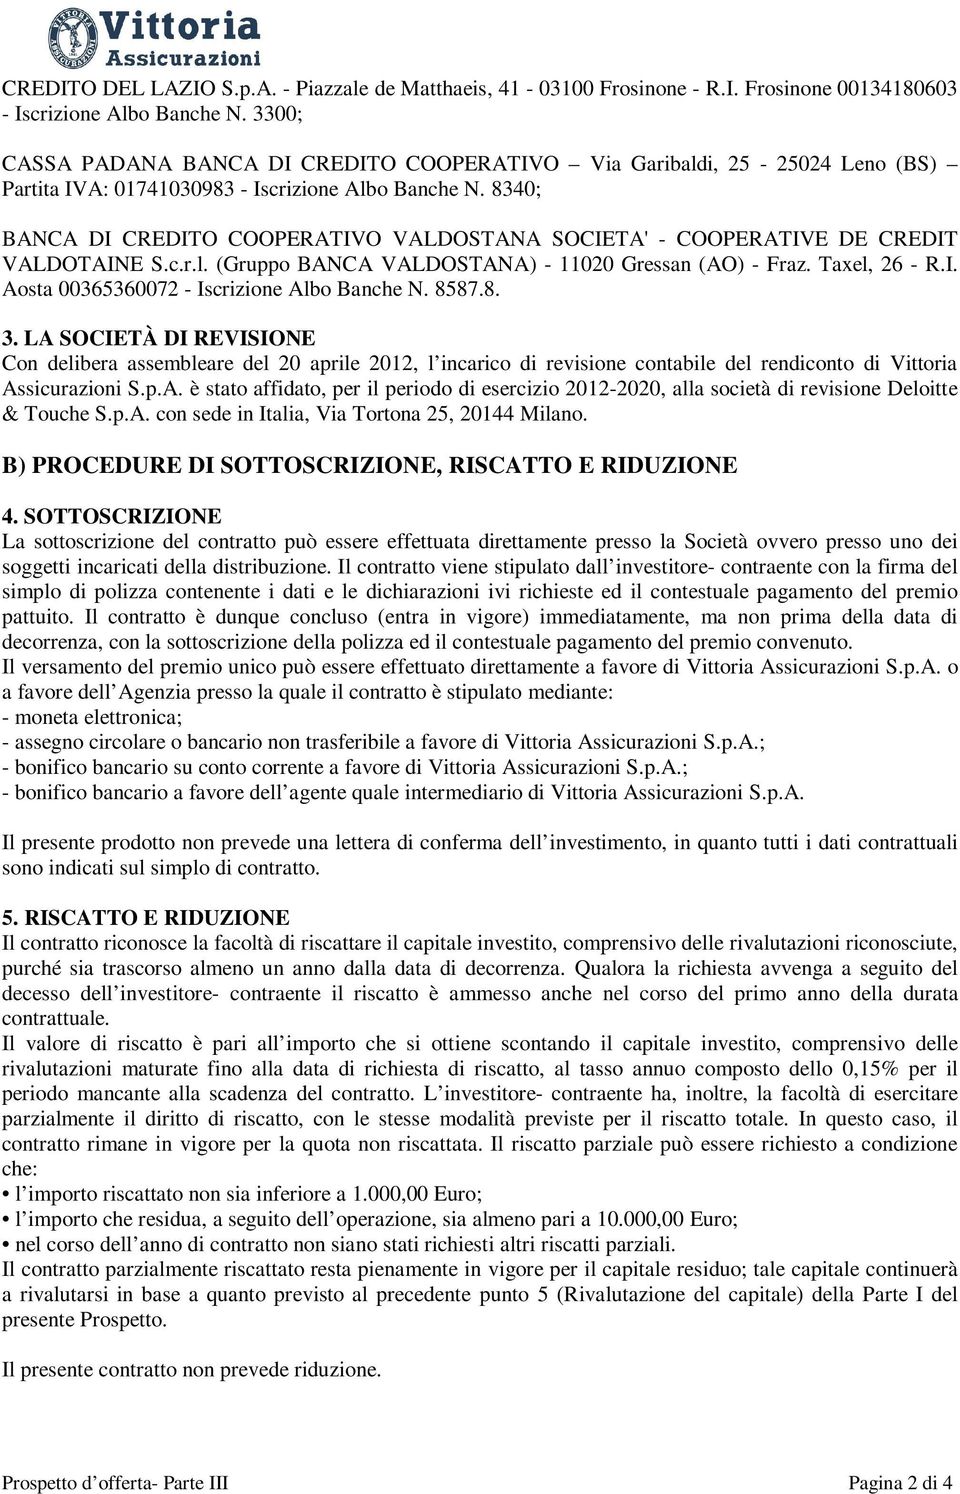 8340; BANCA DI CREDITO COOPERATIVO VALDOSTANA SOCIETA' - COOPERATIVE DE CREDIT VALDOTAINE S.c.r.l. (Gruppo BANCA VALDOSTANA) - 11020 Gressan (AO) - Fraz. Taxel, 26 - R.I. Aosta 00365360072 - Iscrizione Albo Banche N.